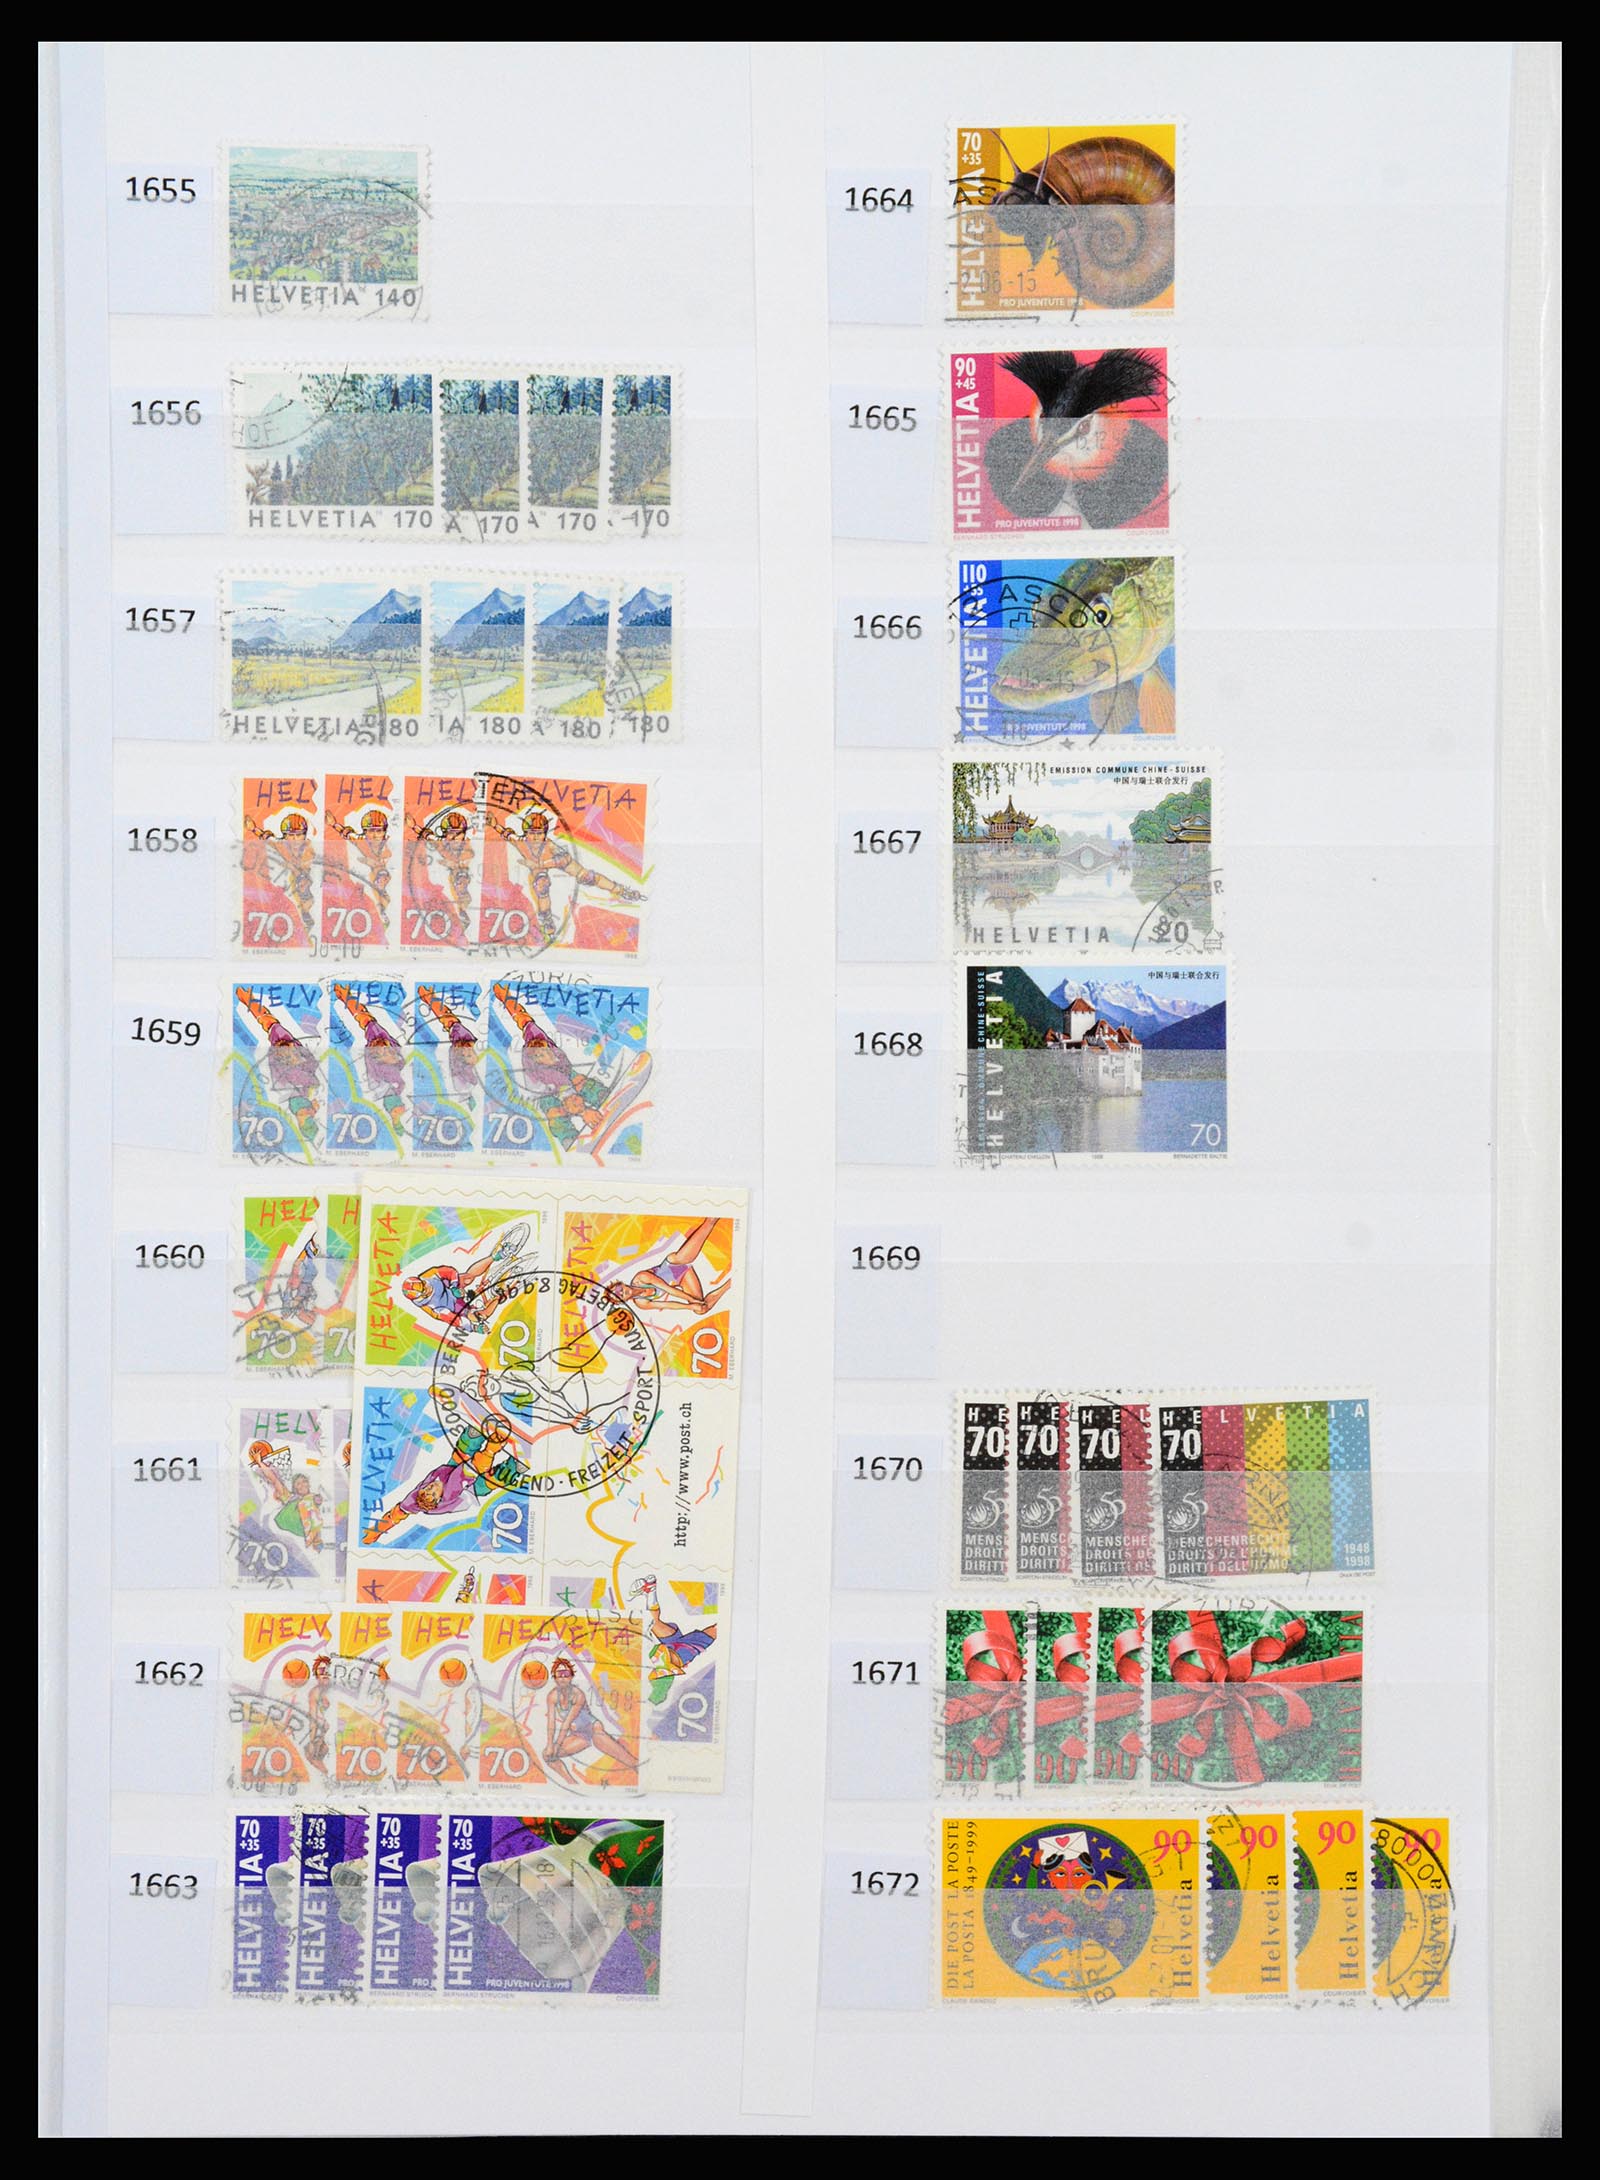 37252 093 - Stamp collection 37252 Switzerland 1900-2011.